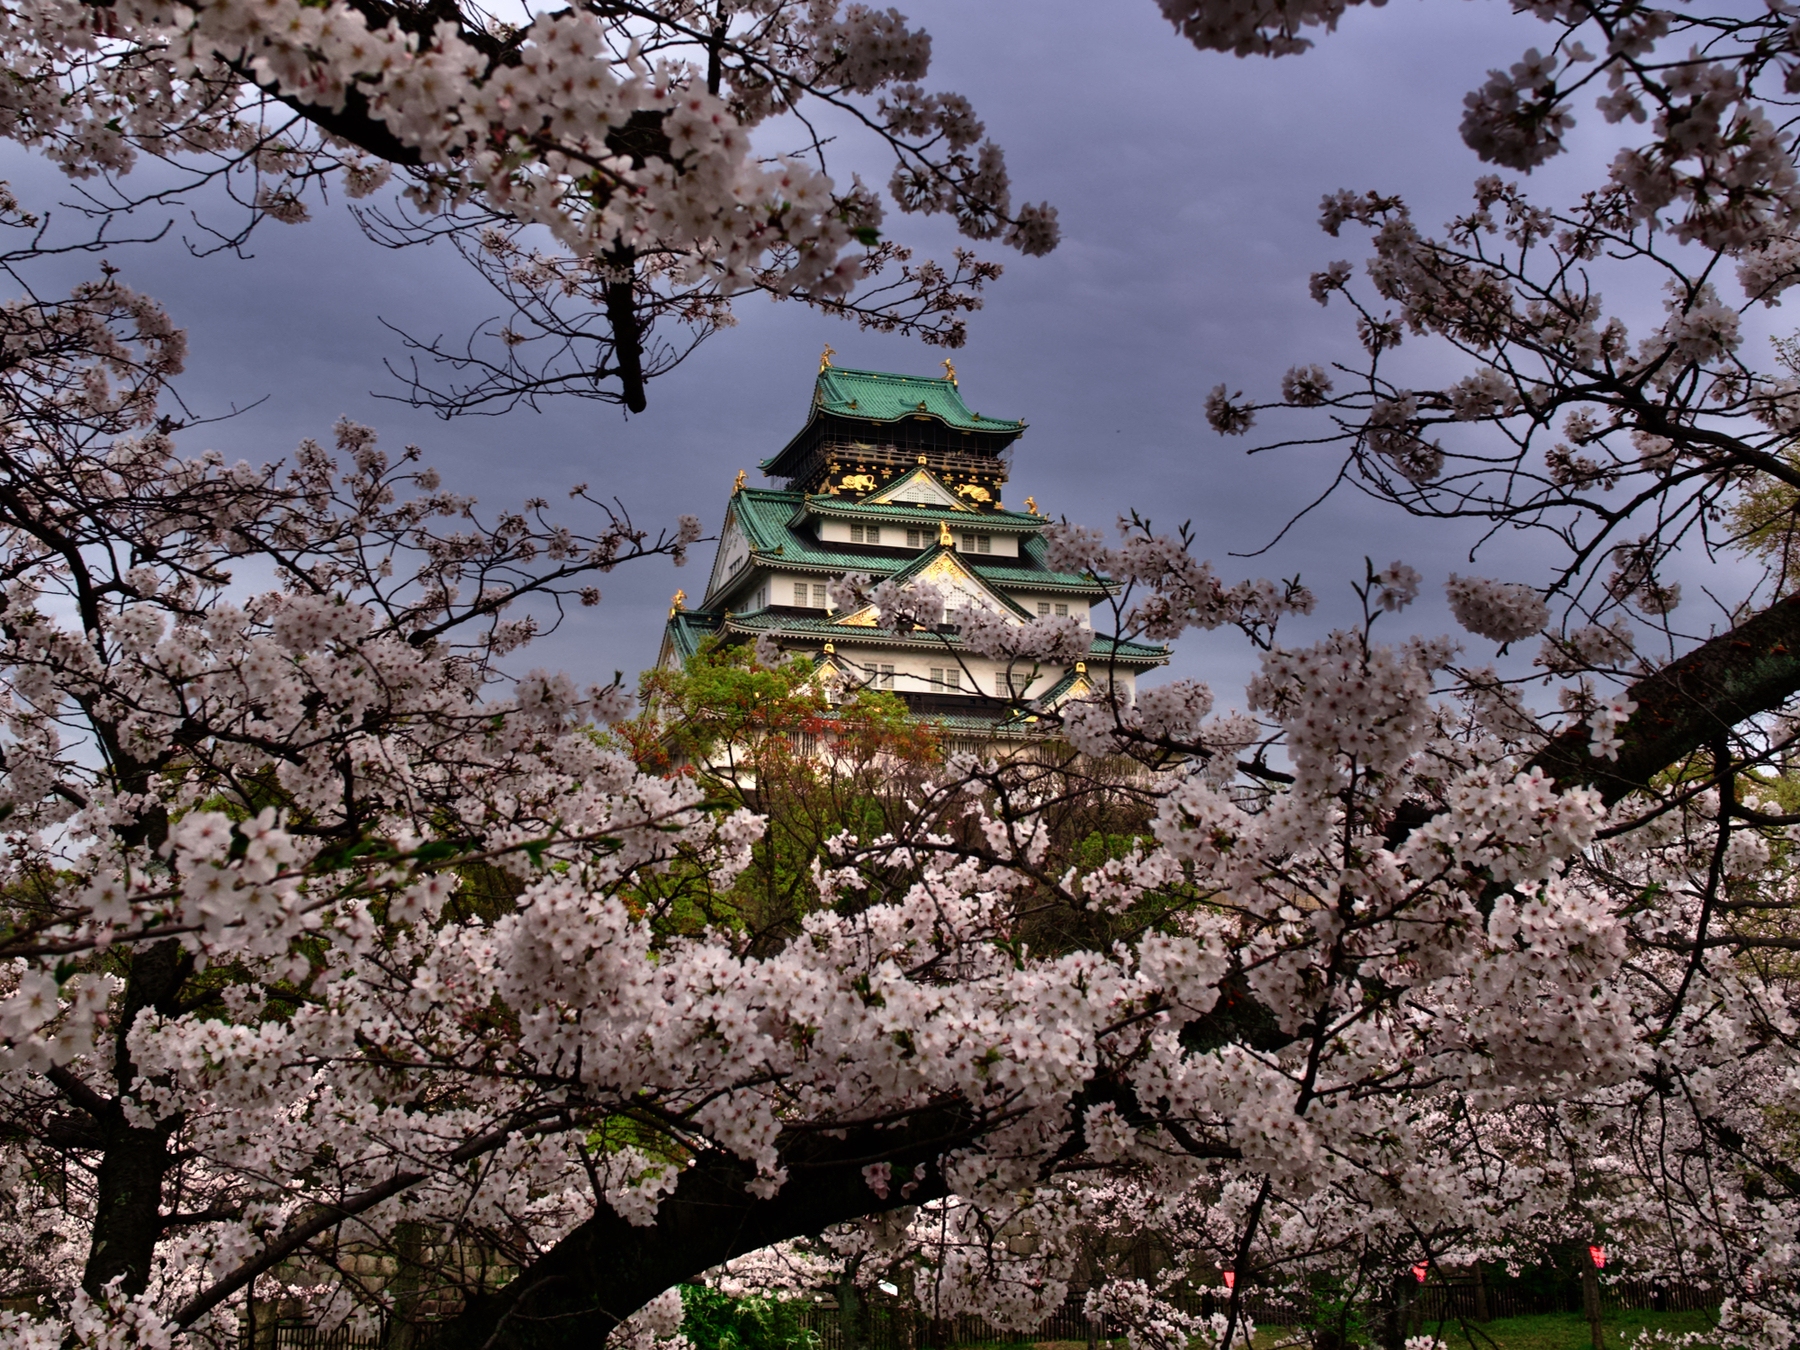 Osaka Castle through the cherry blossoms